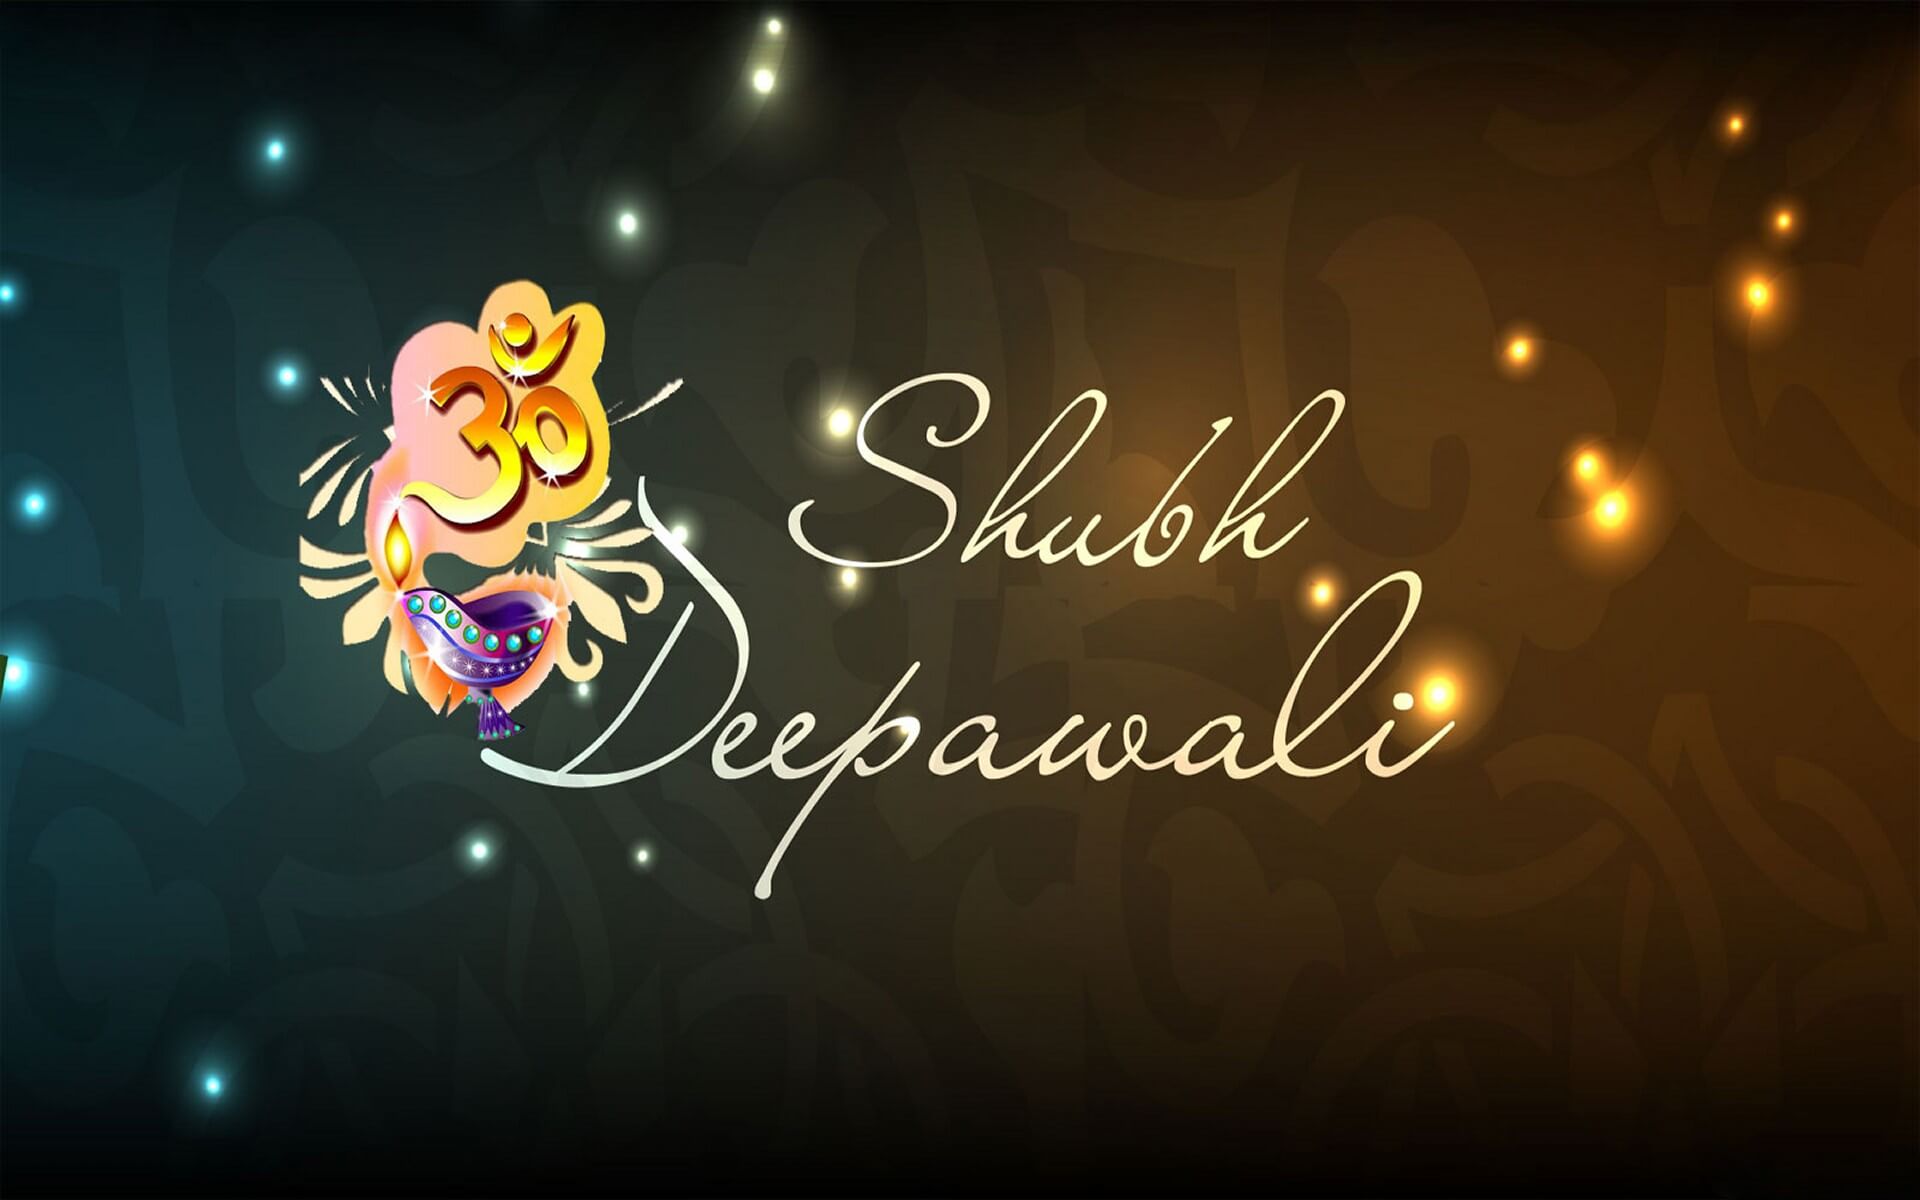 shubh diwali hd wallpaper images greeting card